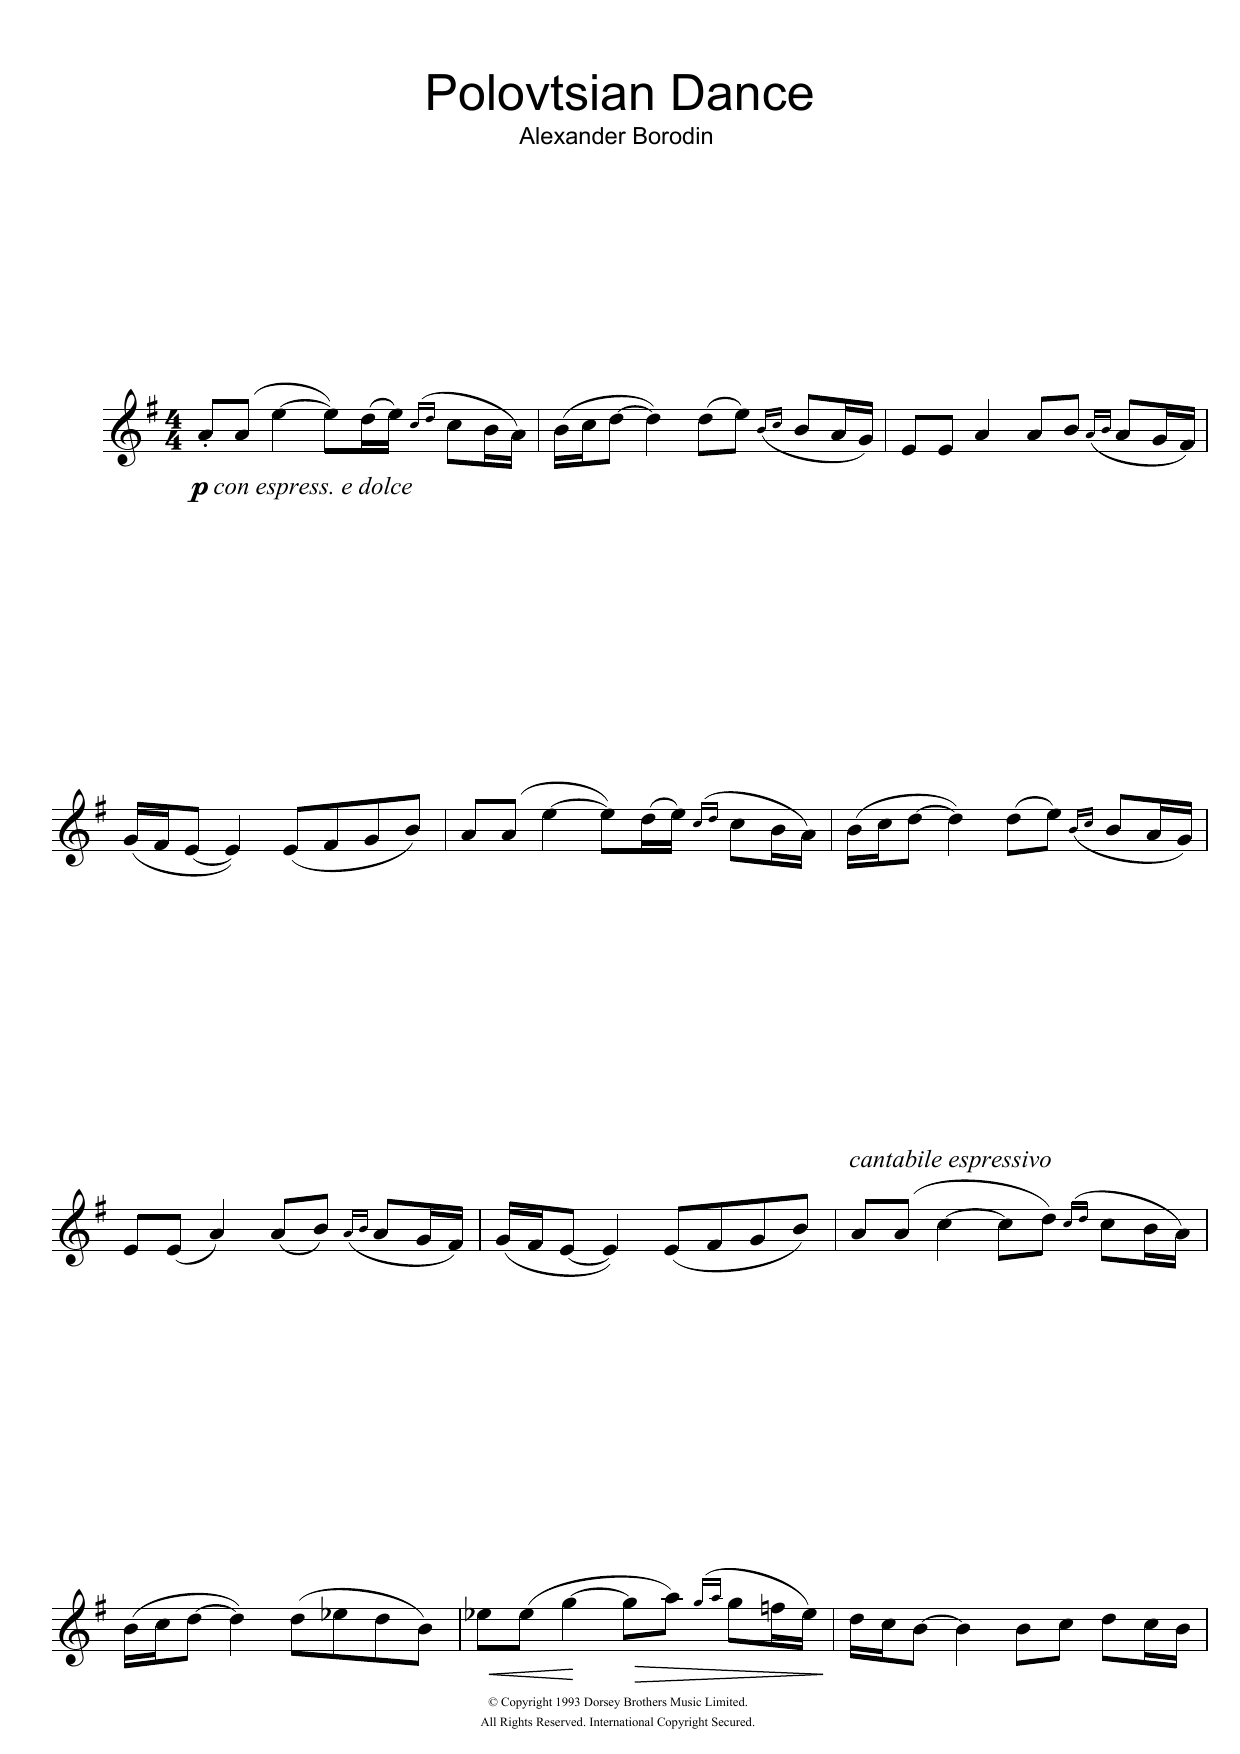 Alexander Borodin Polovtsian Dance Sheet Music Notes & Chords for Alto Saxophone - Download or Print PDF